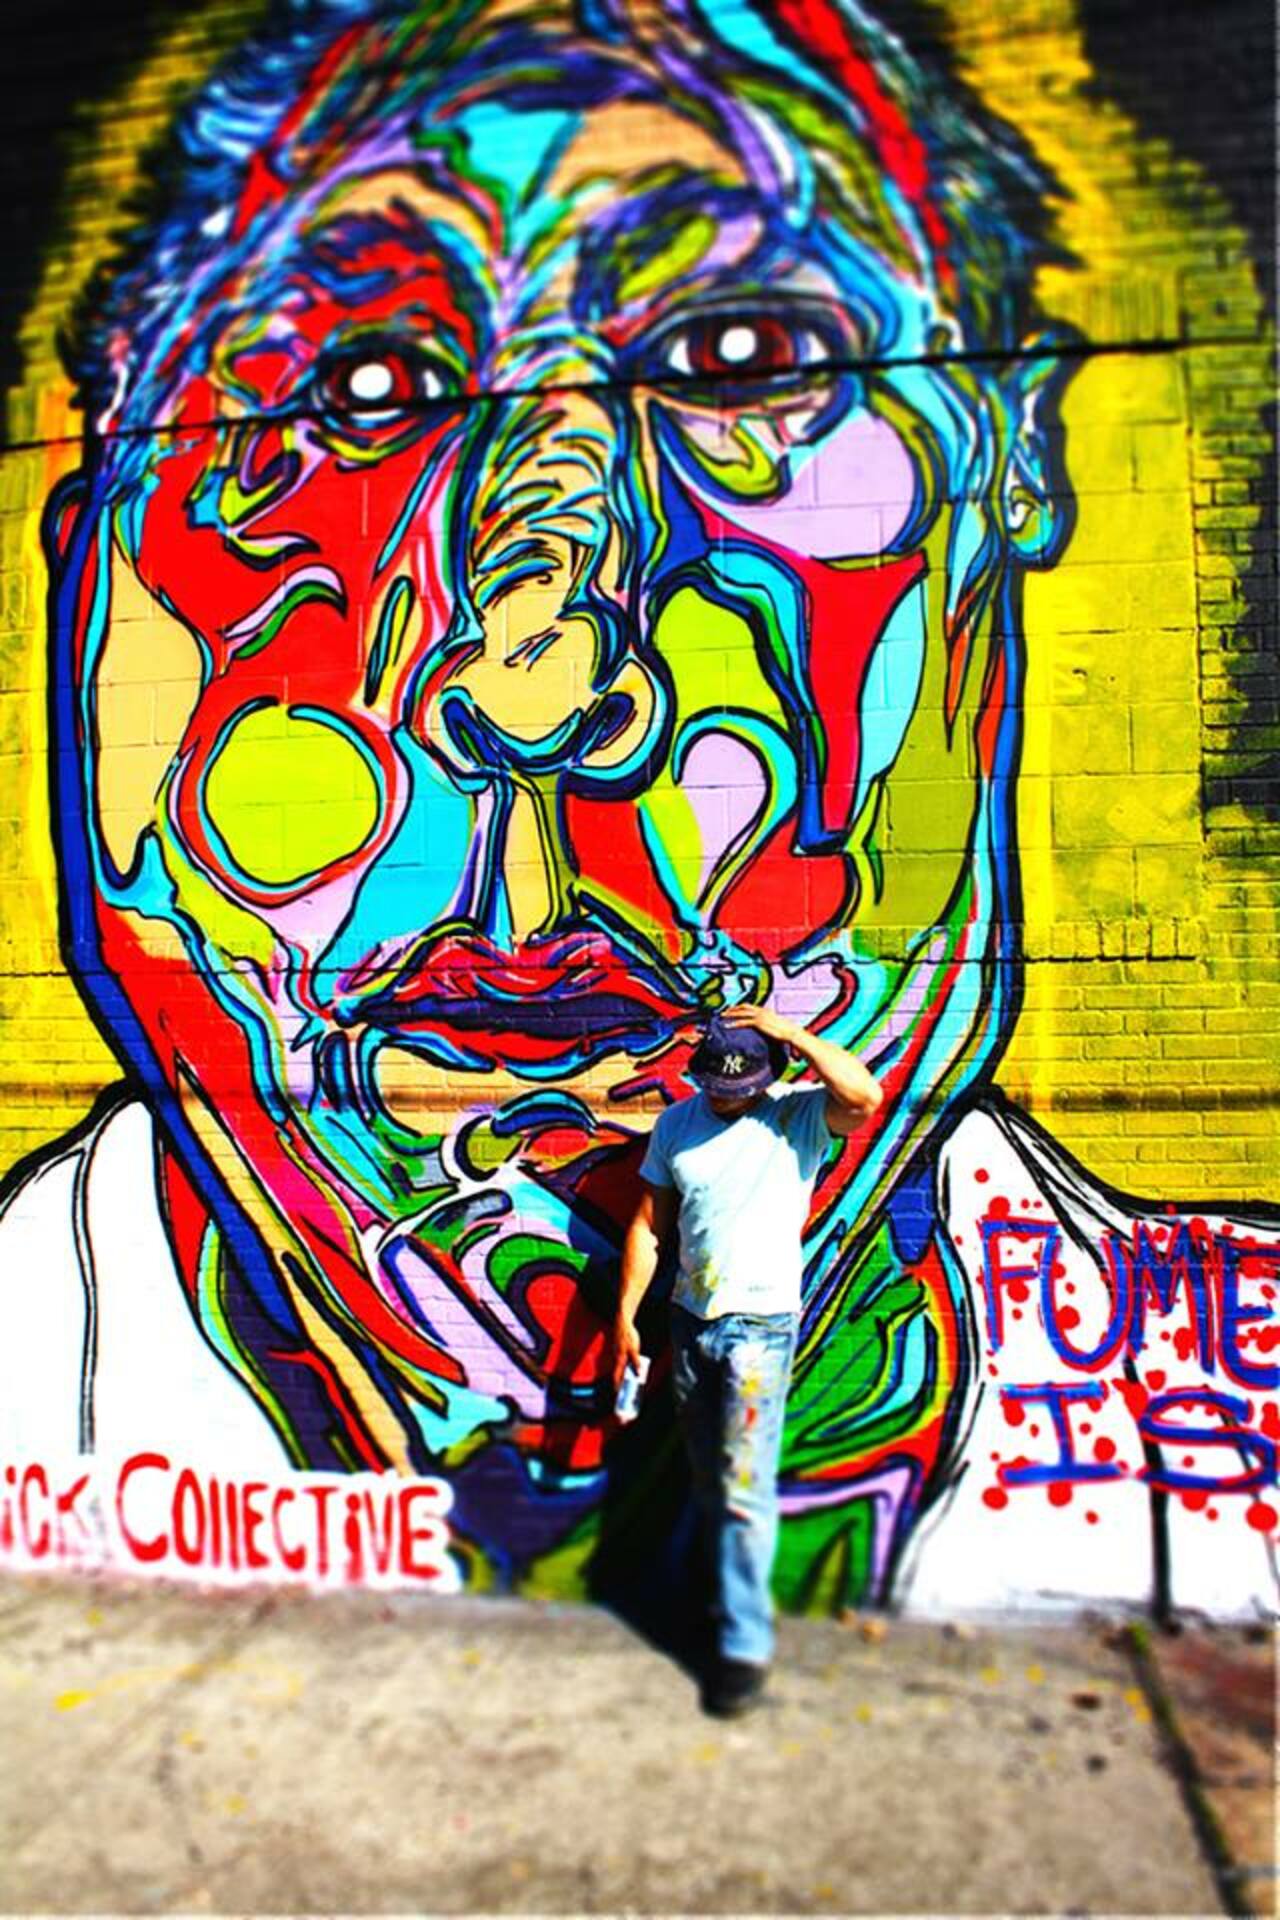 Bushwick street art...Need i say more #graffiti #streetart #brooklyn #bushwick #hiphop  @bklyntheborough https://t.co/daYDjEuQF0